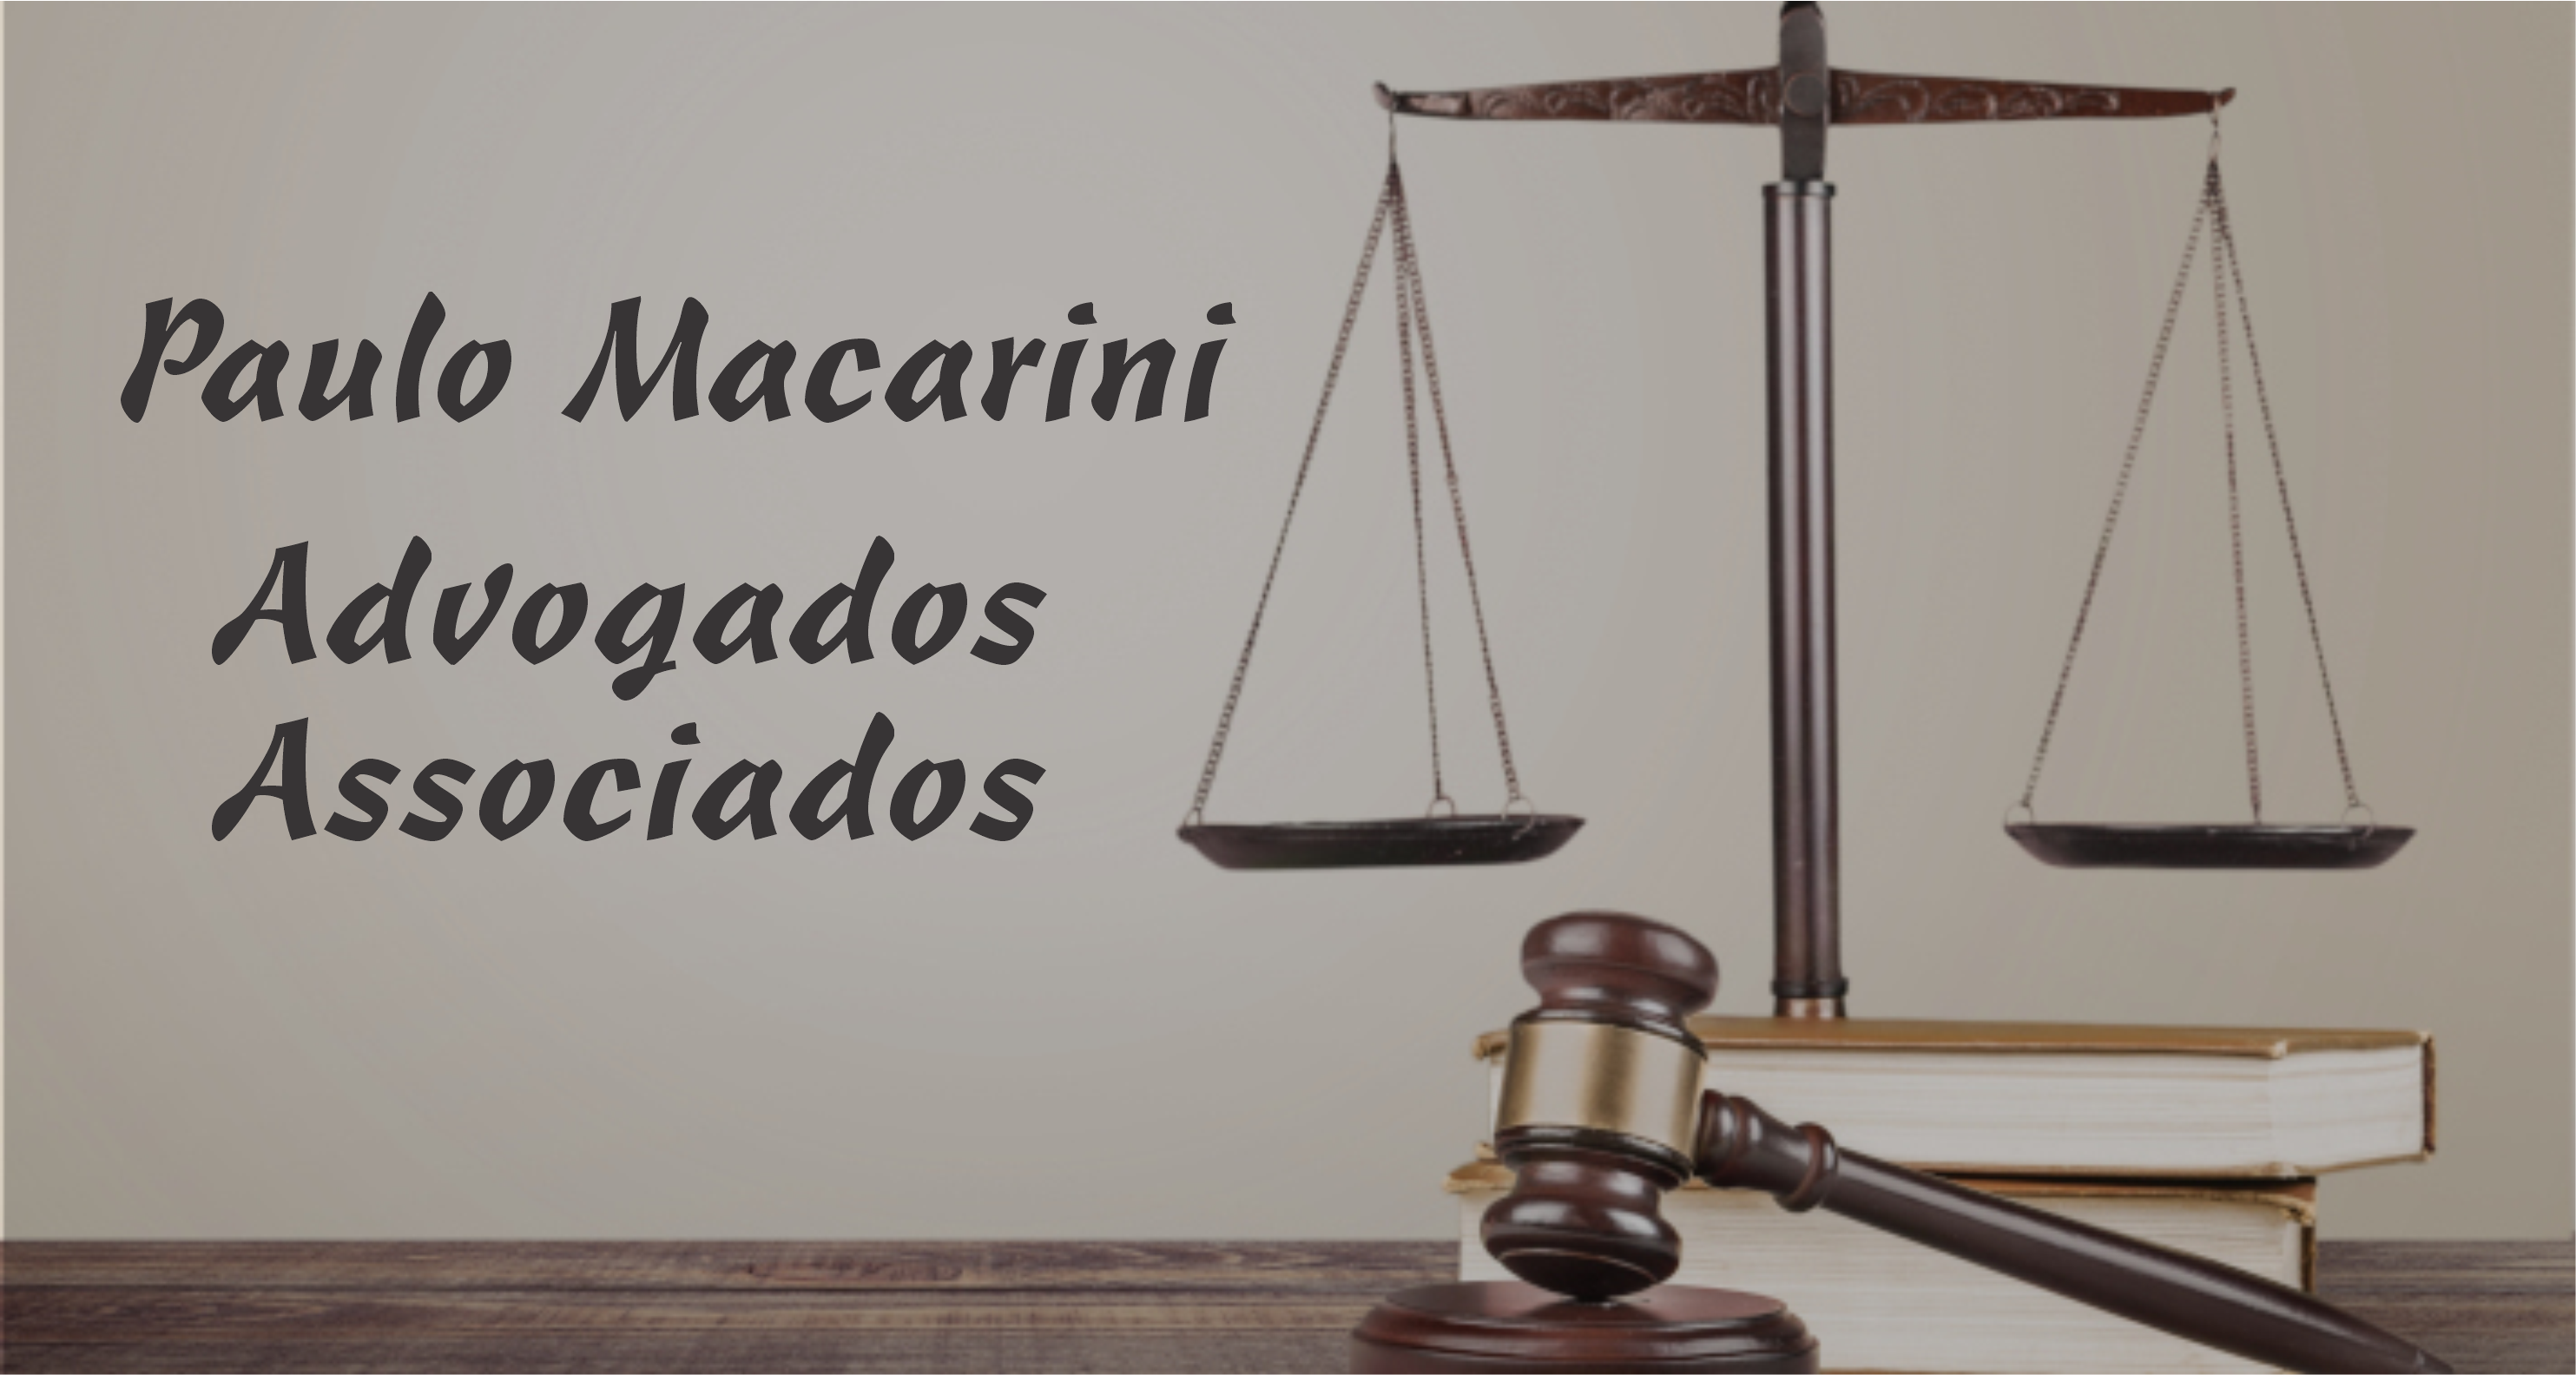 Paulo Macarini Advogados Associados      RUA QUINZE DE NOVEMBRO, 362, CURITIBA - PR  Fones: (41)3232-1623 /